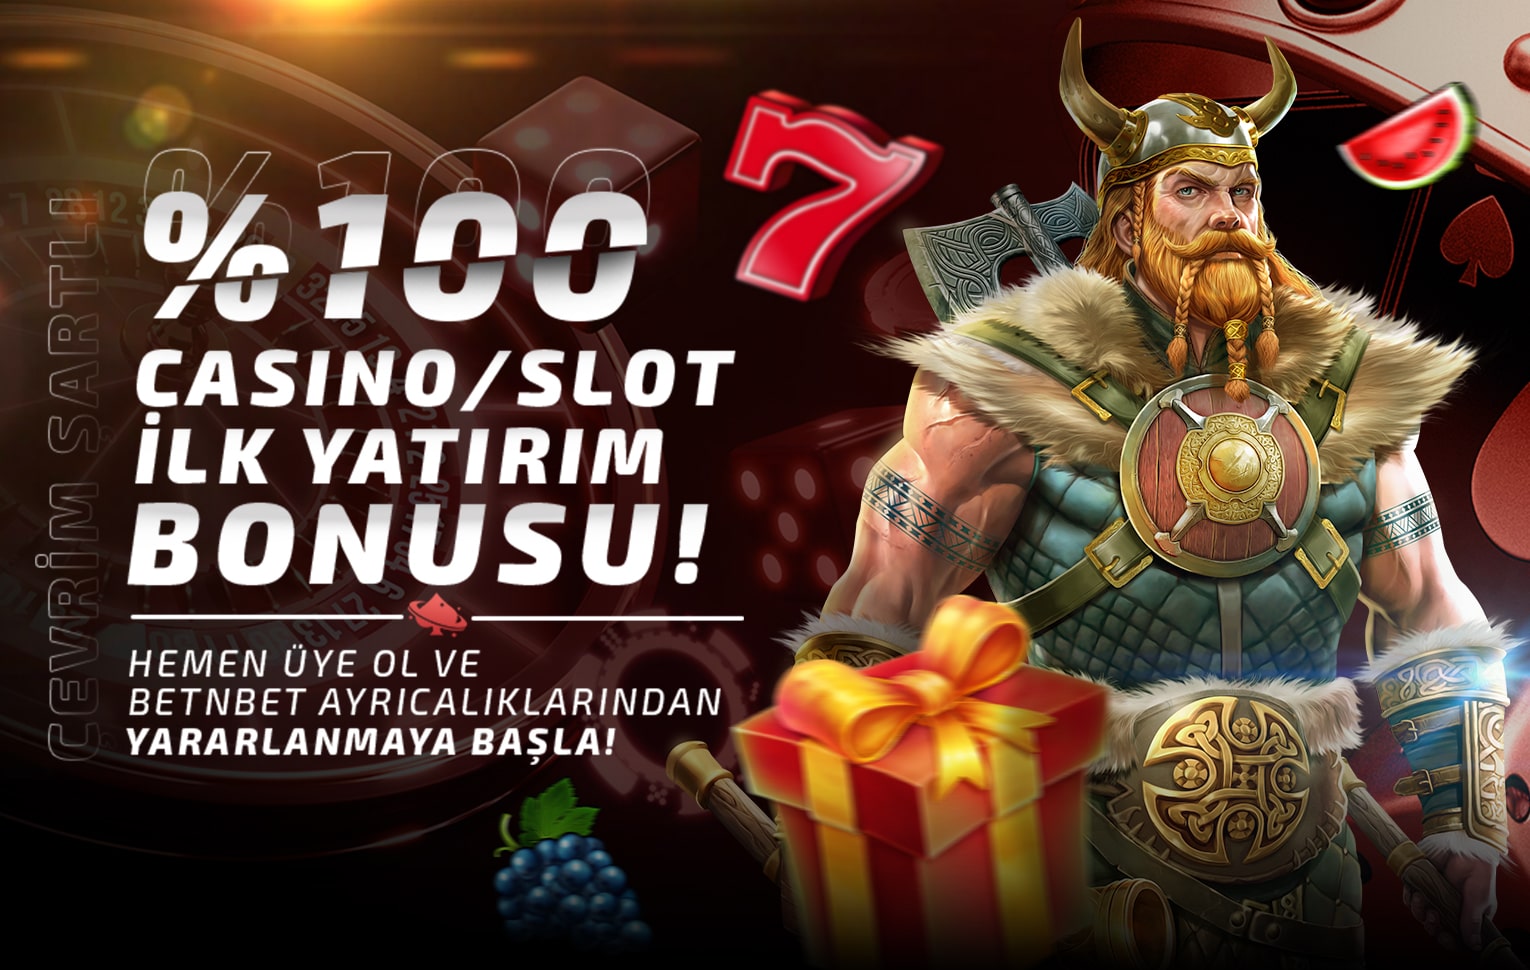 %100 Casino / SLOT İlk Yatırım Bonusu!